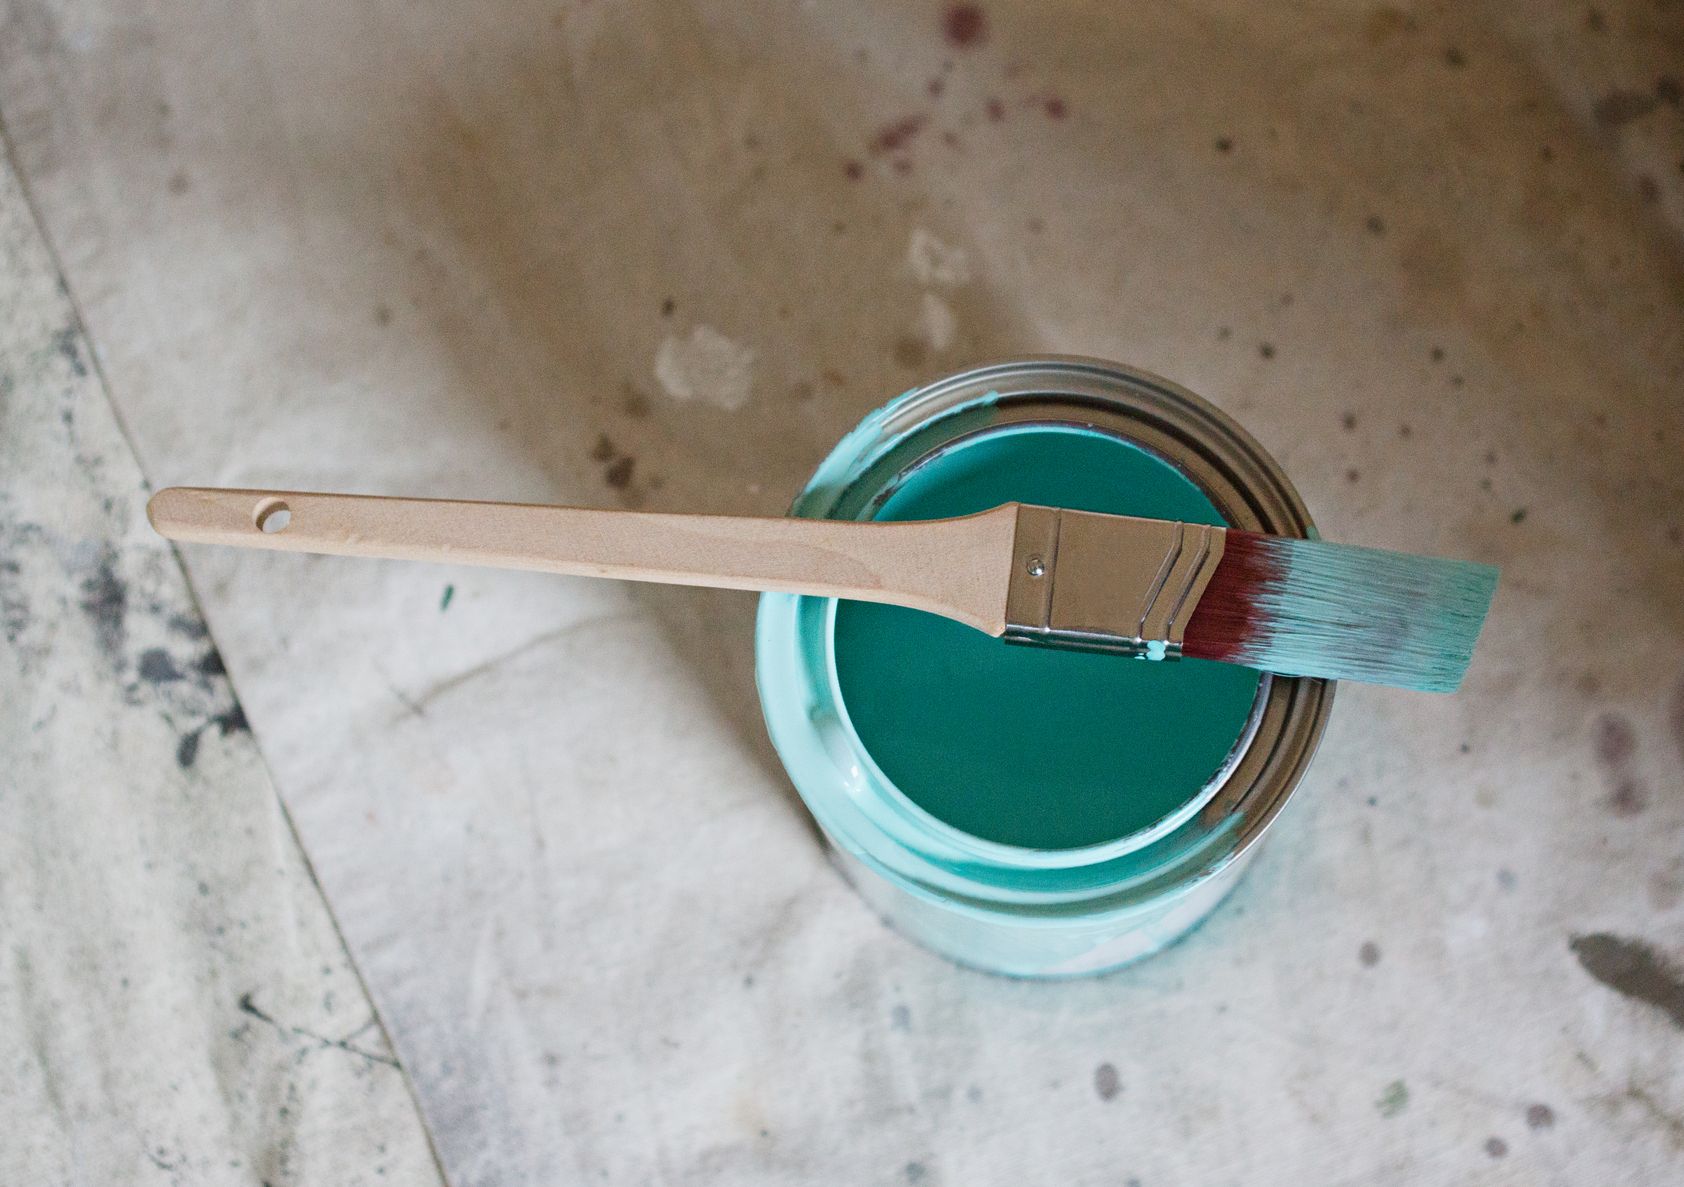 How to match paint colour?  Bunnings Workshop community